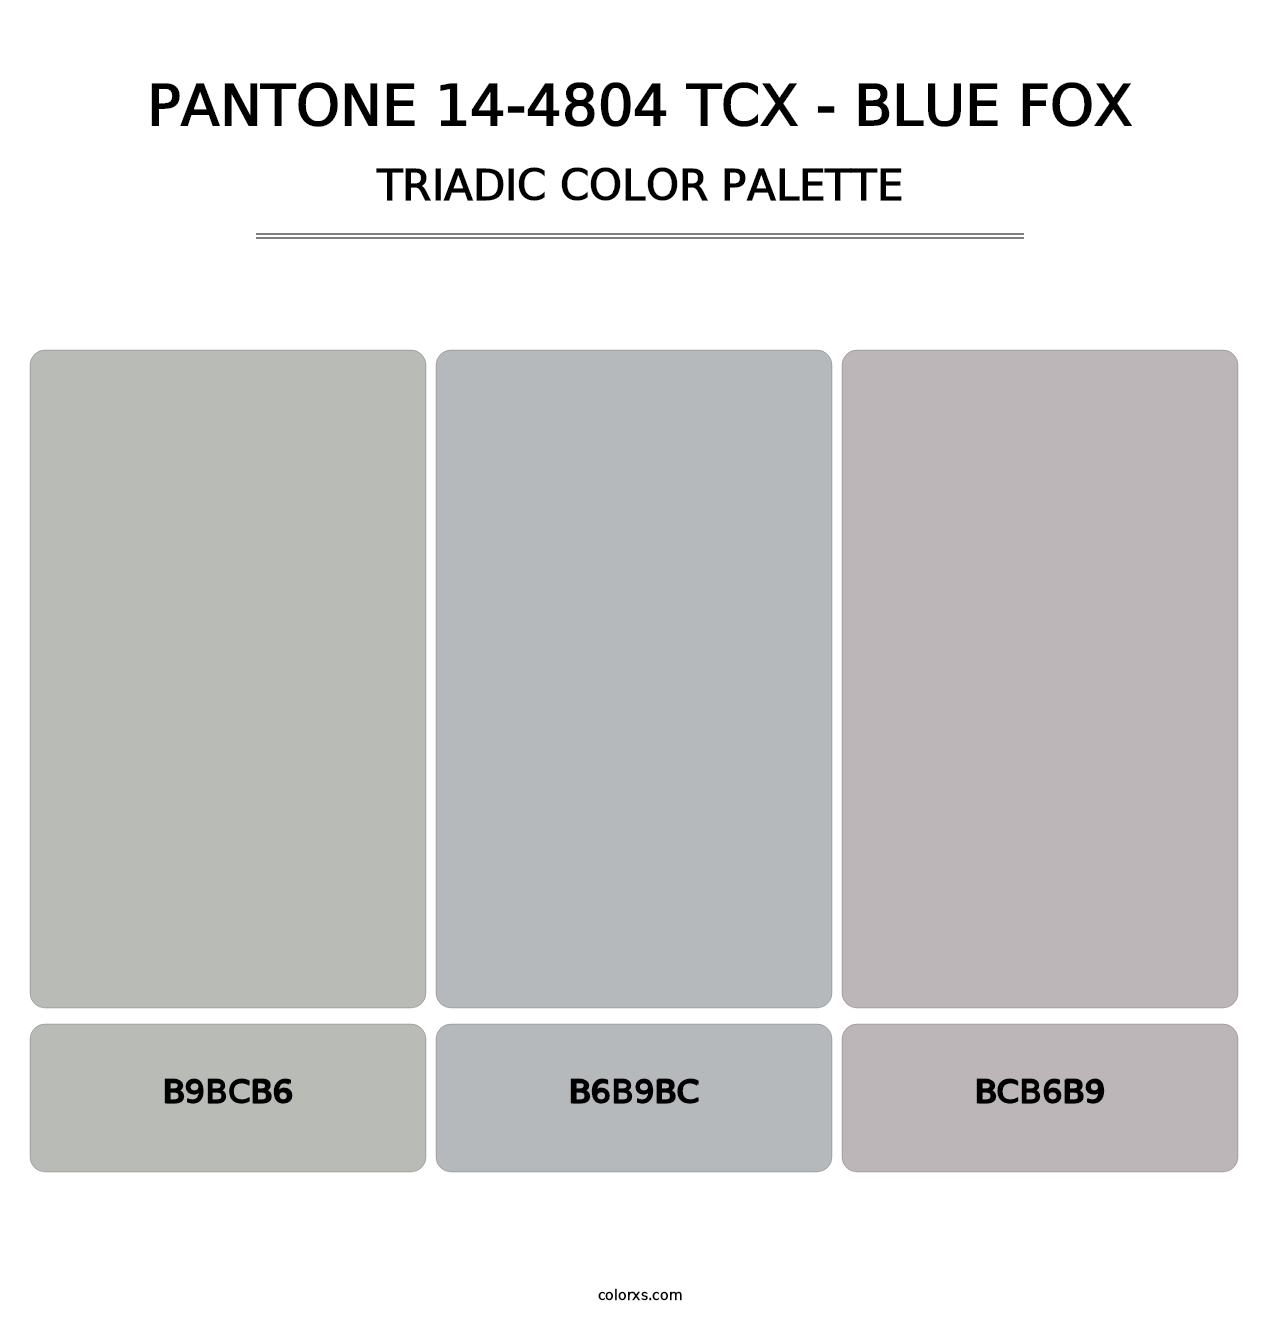 PANTONE 14-4804 TCX - Blue Fox - Triadic Color Palette